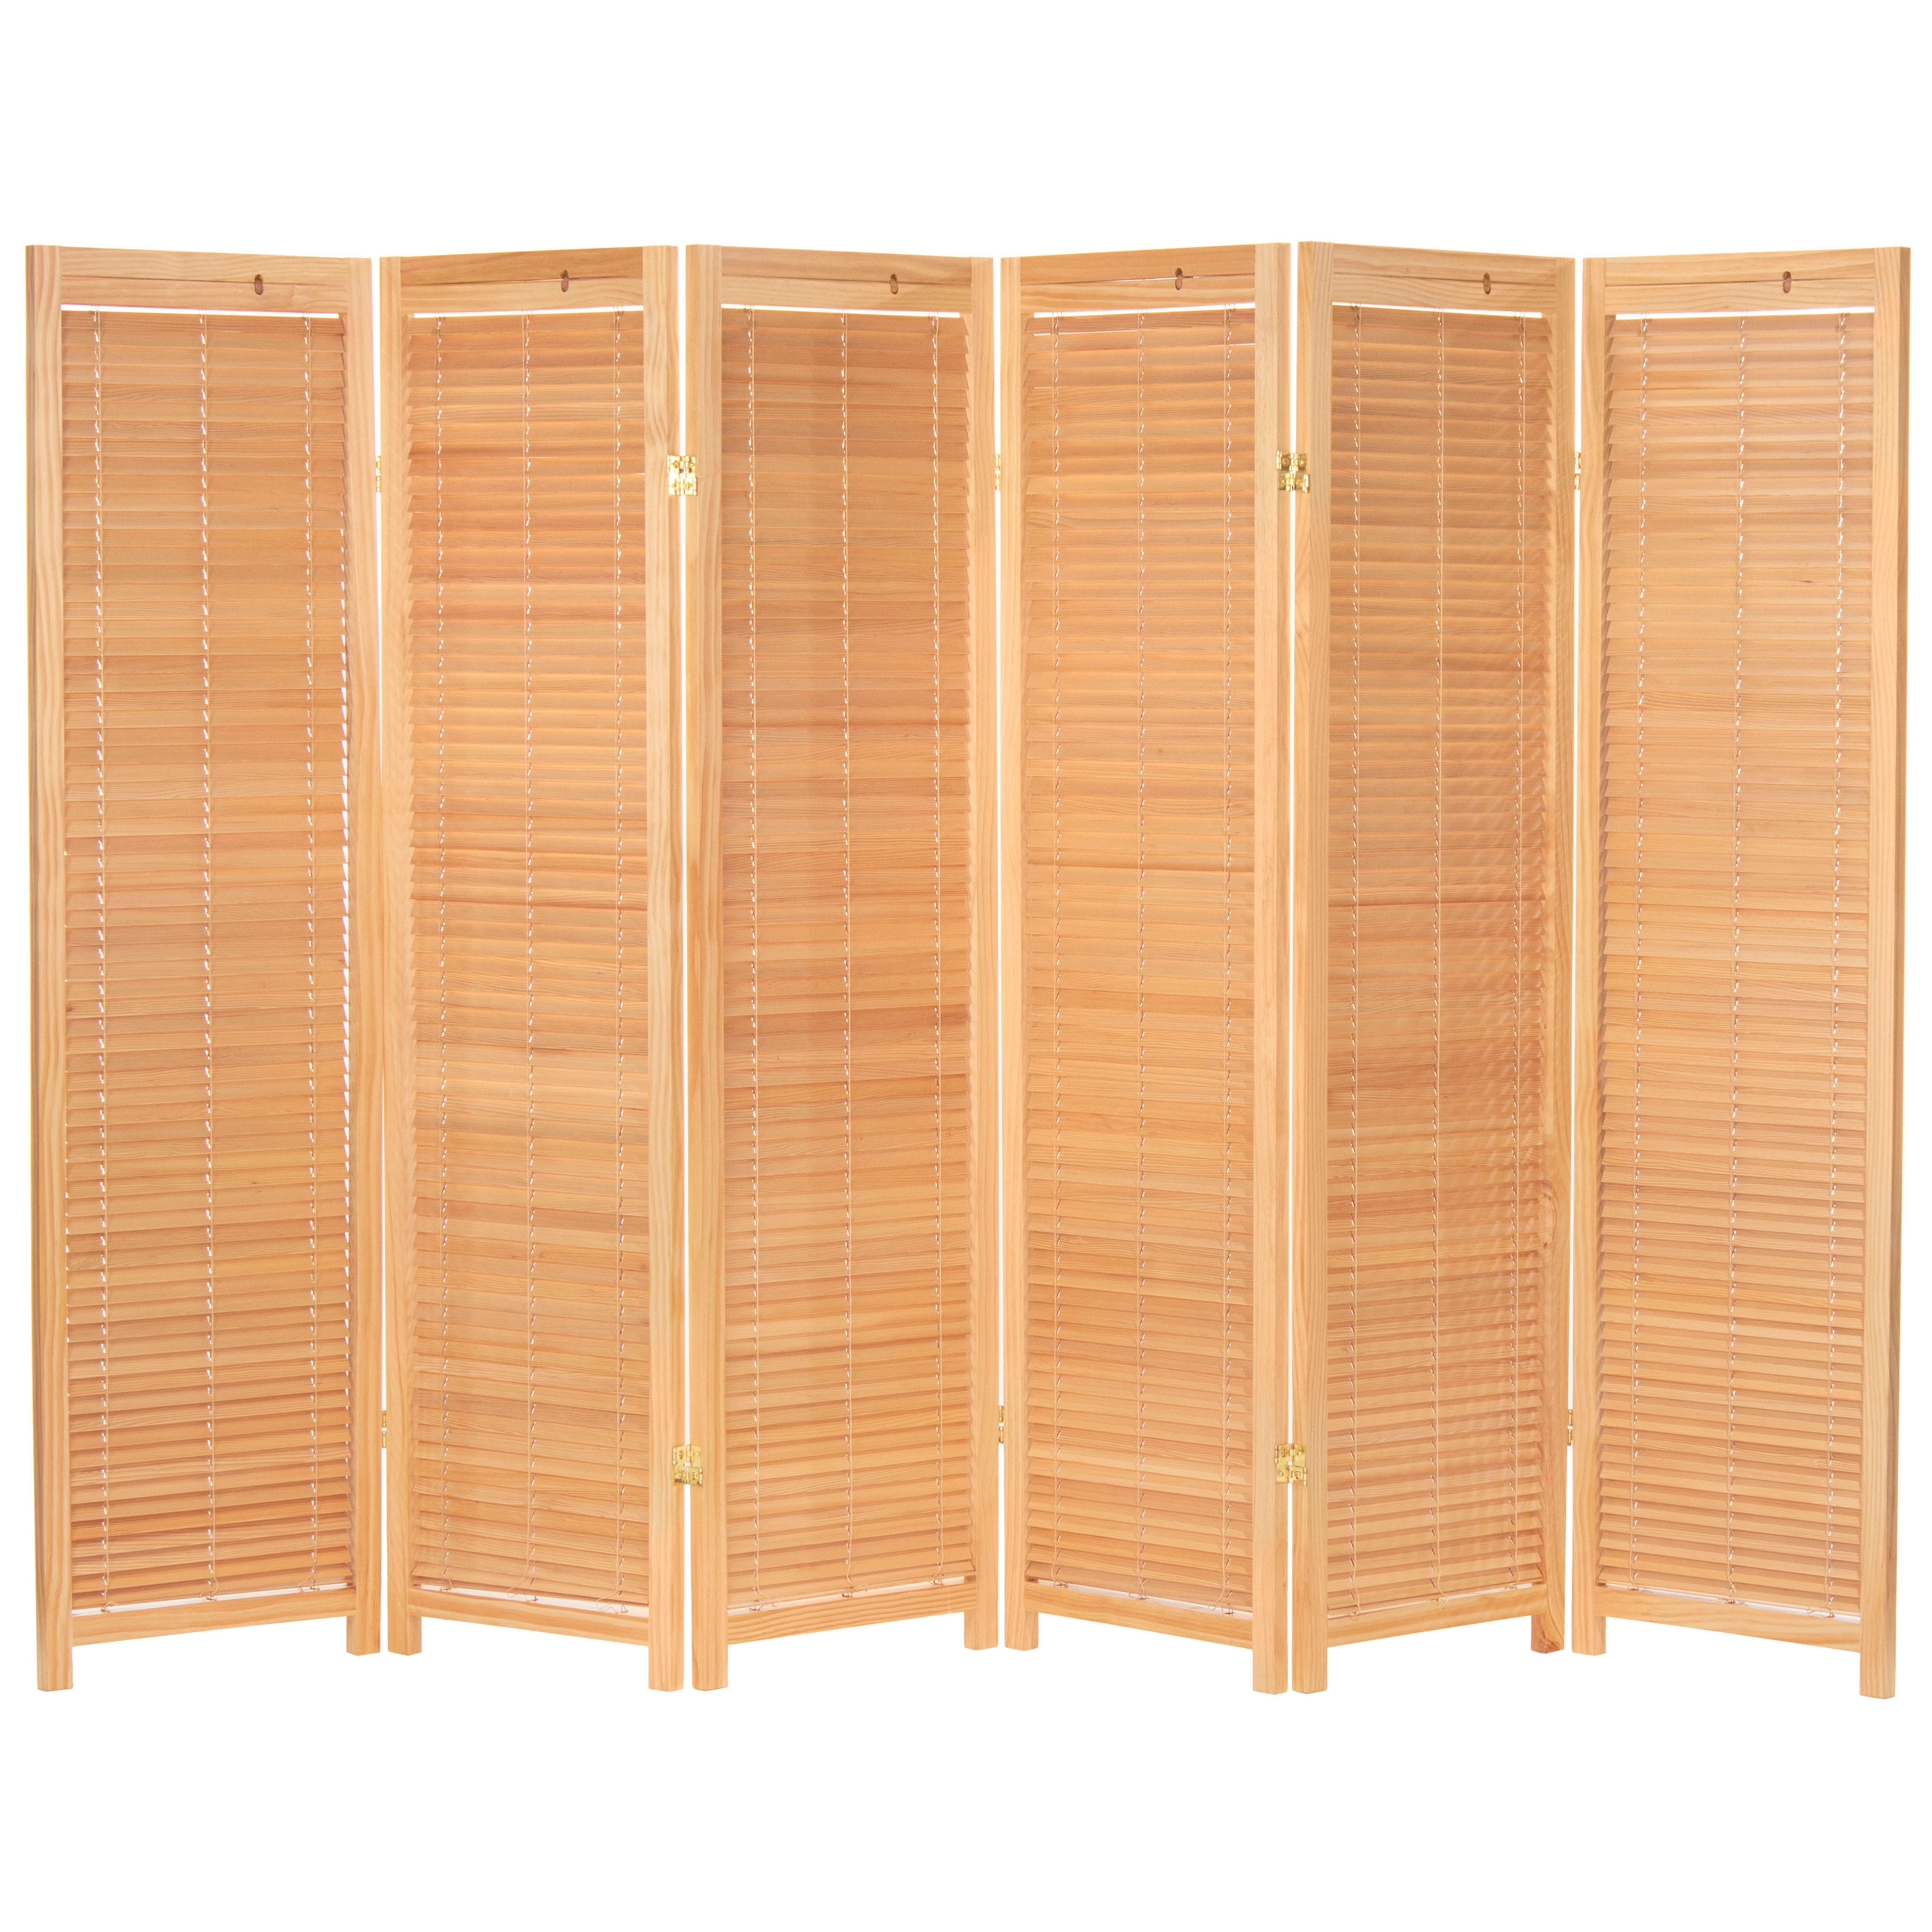 6 Panel Room Divider Classic Venetian Wooden Slat Furniture 67” Tall Home Decor 